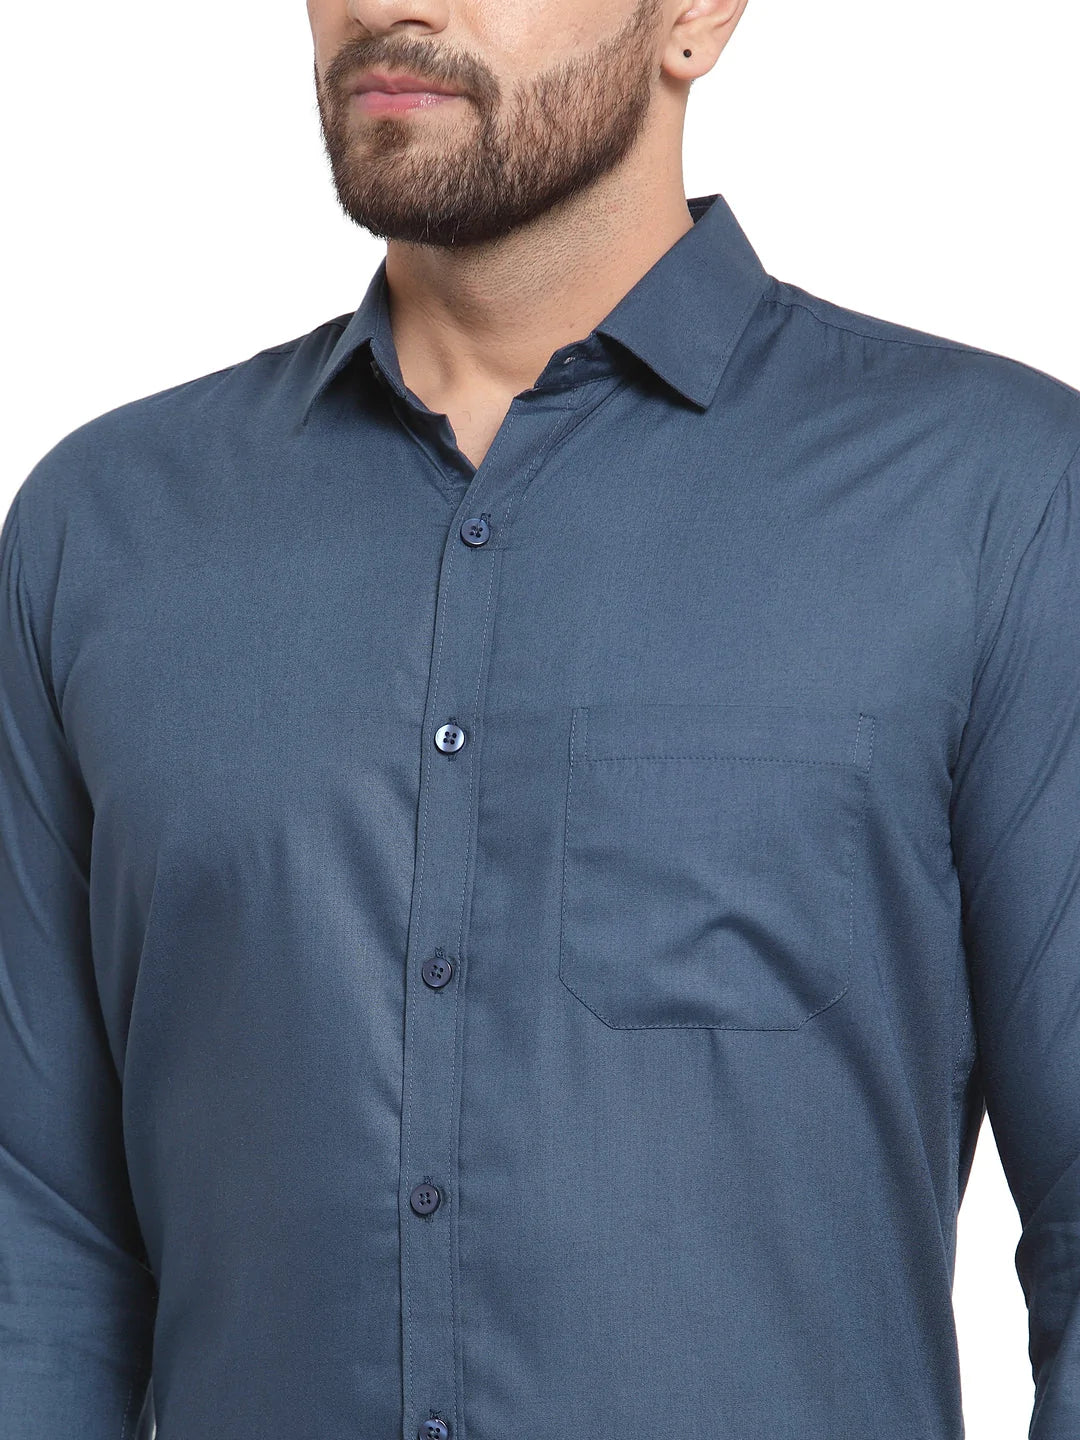 Jainish Men's Cotton Solid Teal Blue Formal Shirt's ( SF 361Teal )